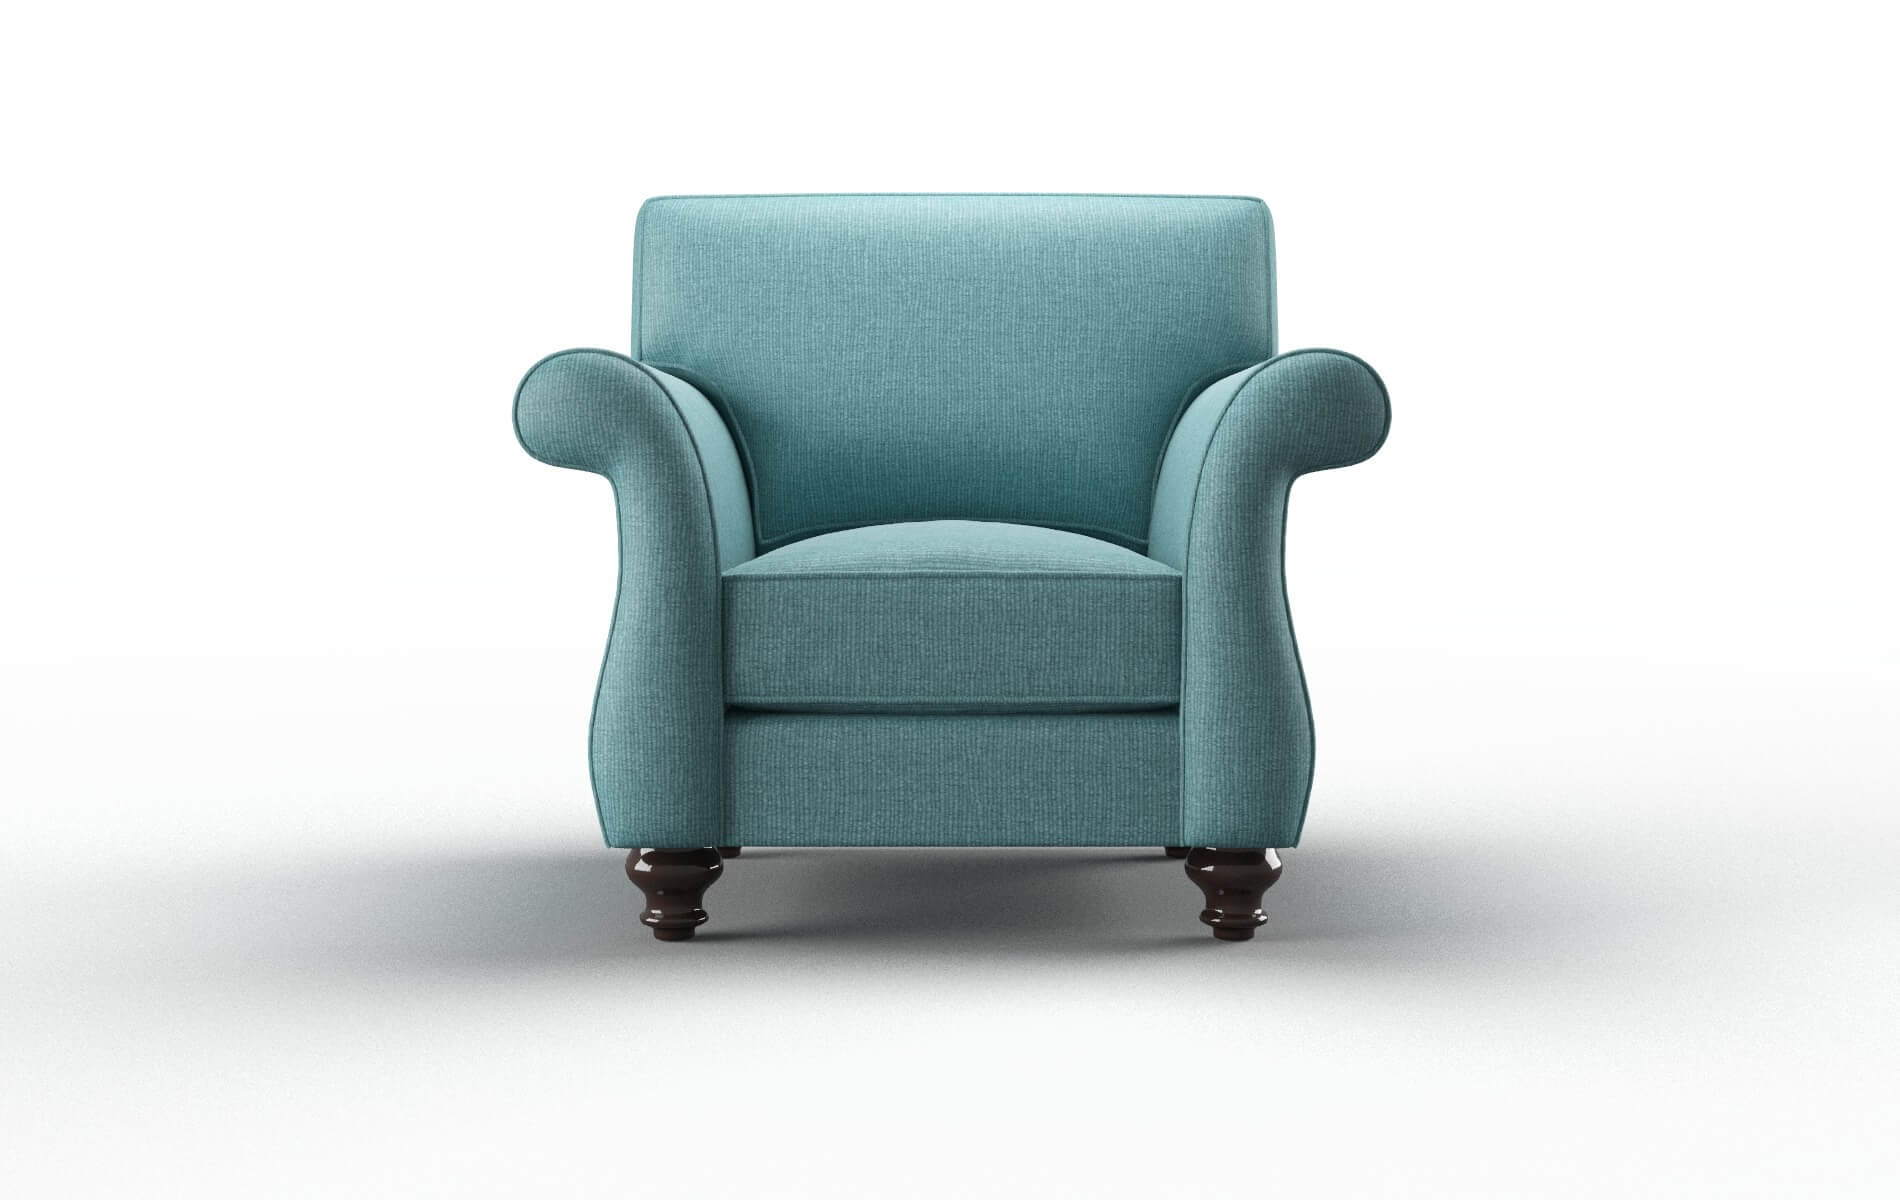 Pisa Parker Turquoise chair espresso legs